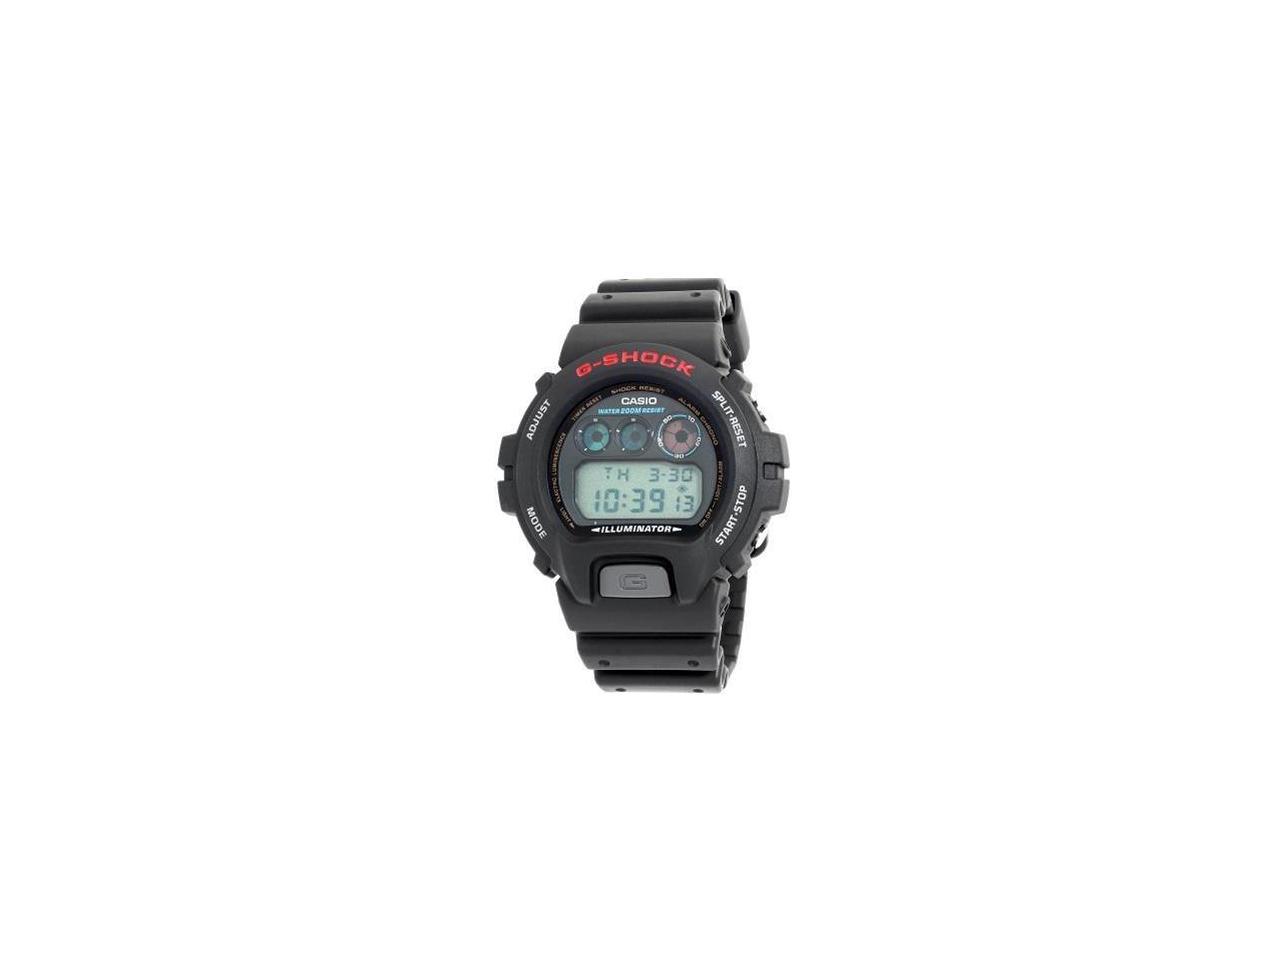 Casio Men's G-Shock Black Classic Digital Watch DW6900-1V - image 2 of 5